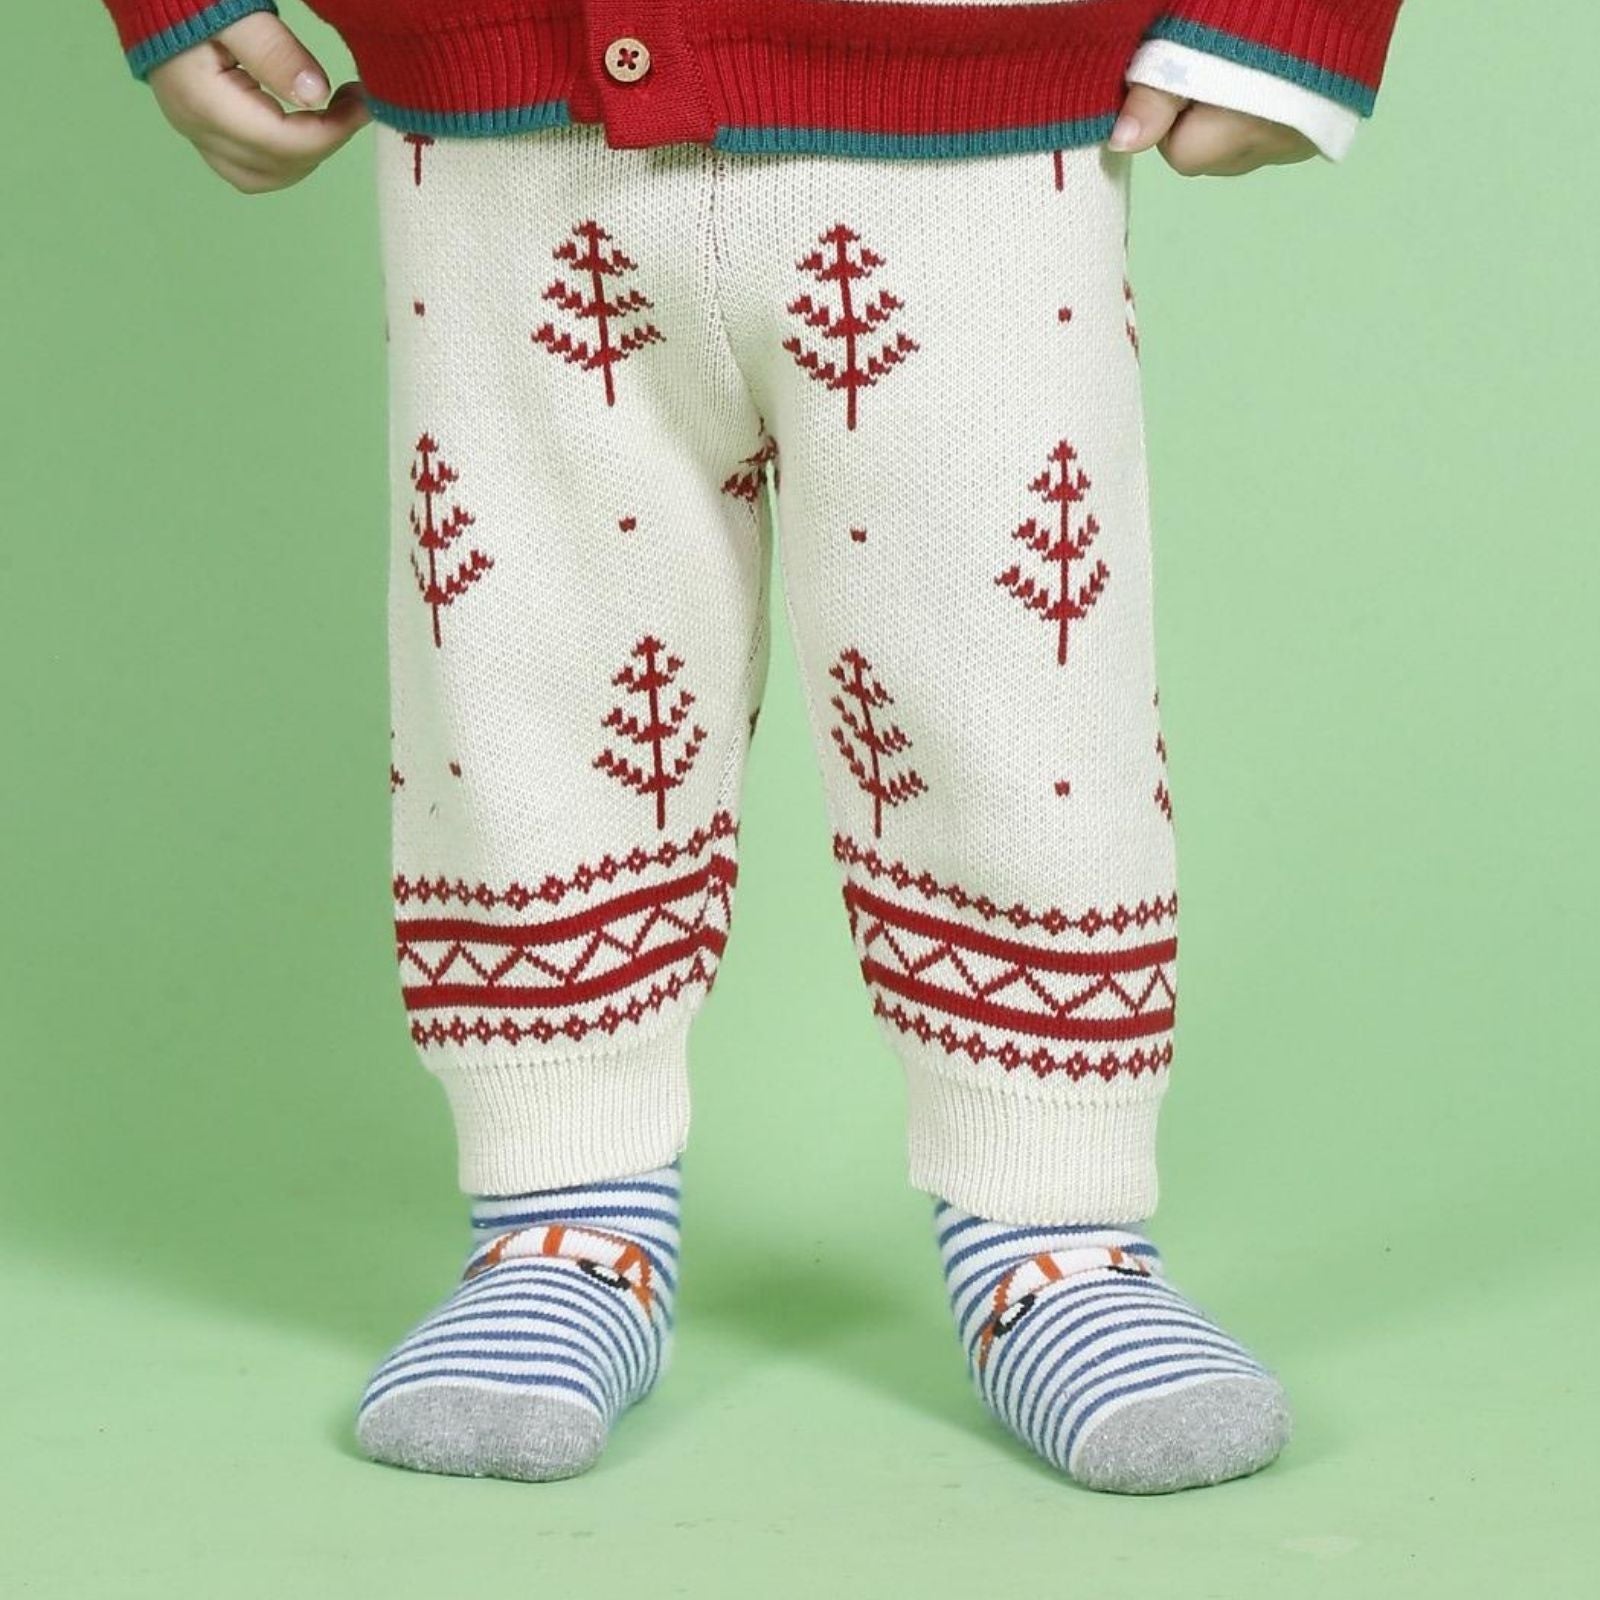 Greendeer Joyful Reindeer & Hearth Warming Bear 100% Cotton Sweater with Lower Set of 3